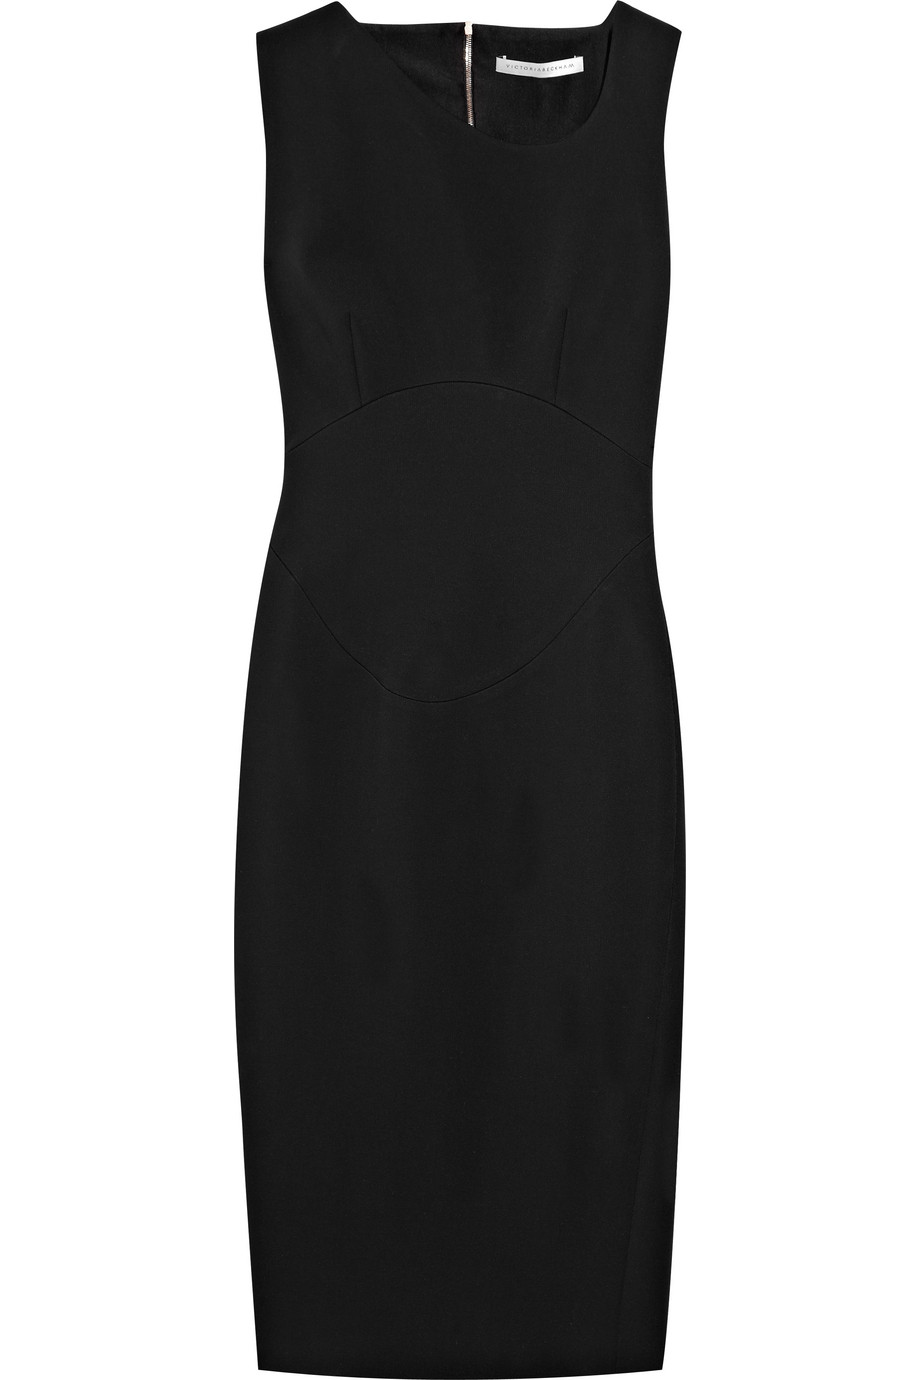 Victoria Beckham Asymmetric Jersey Dress in Black | Lyst